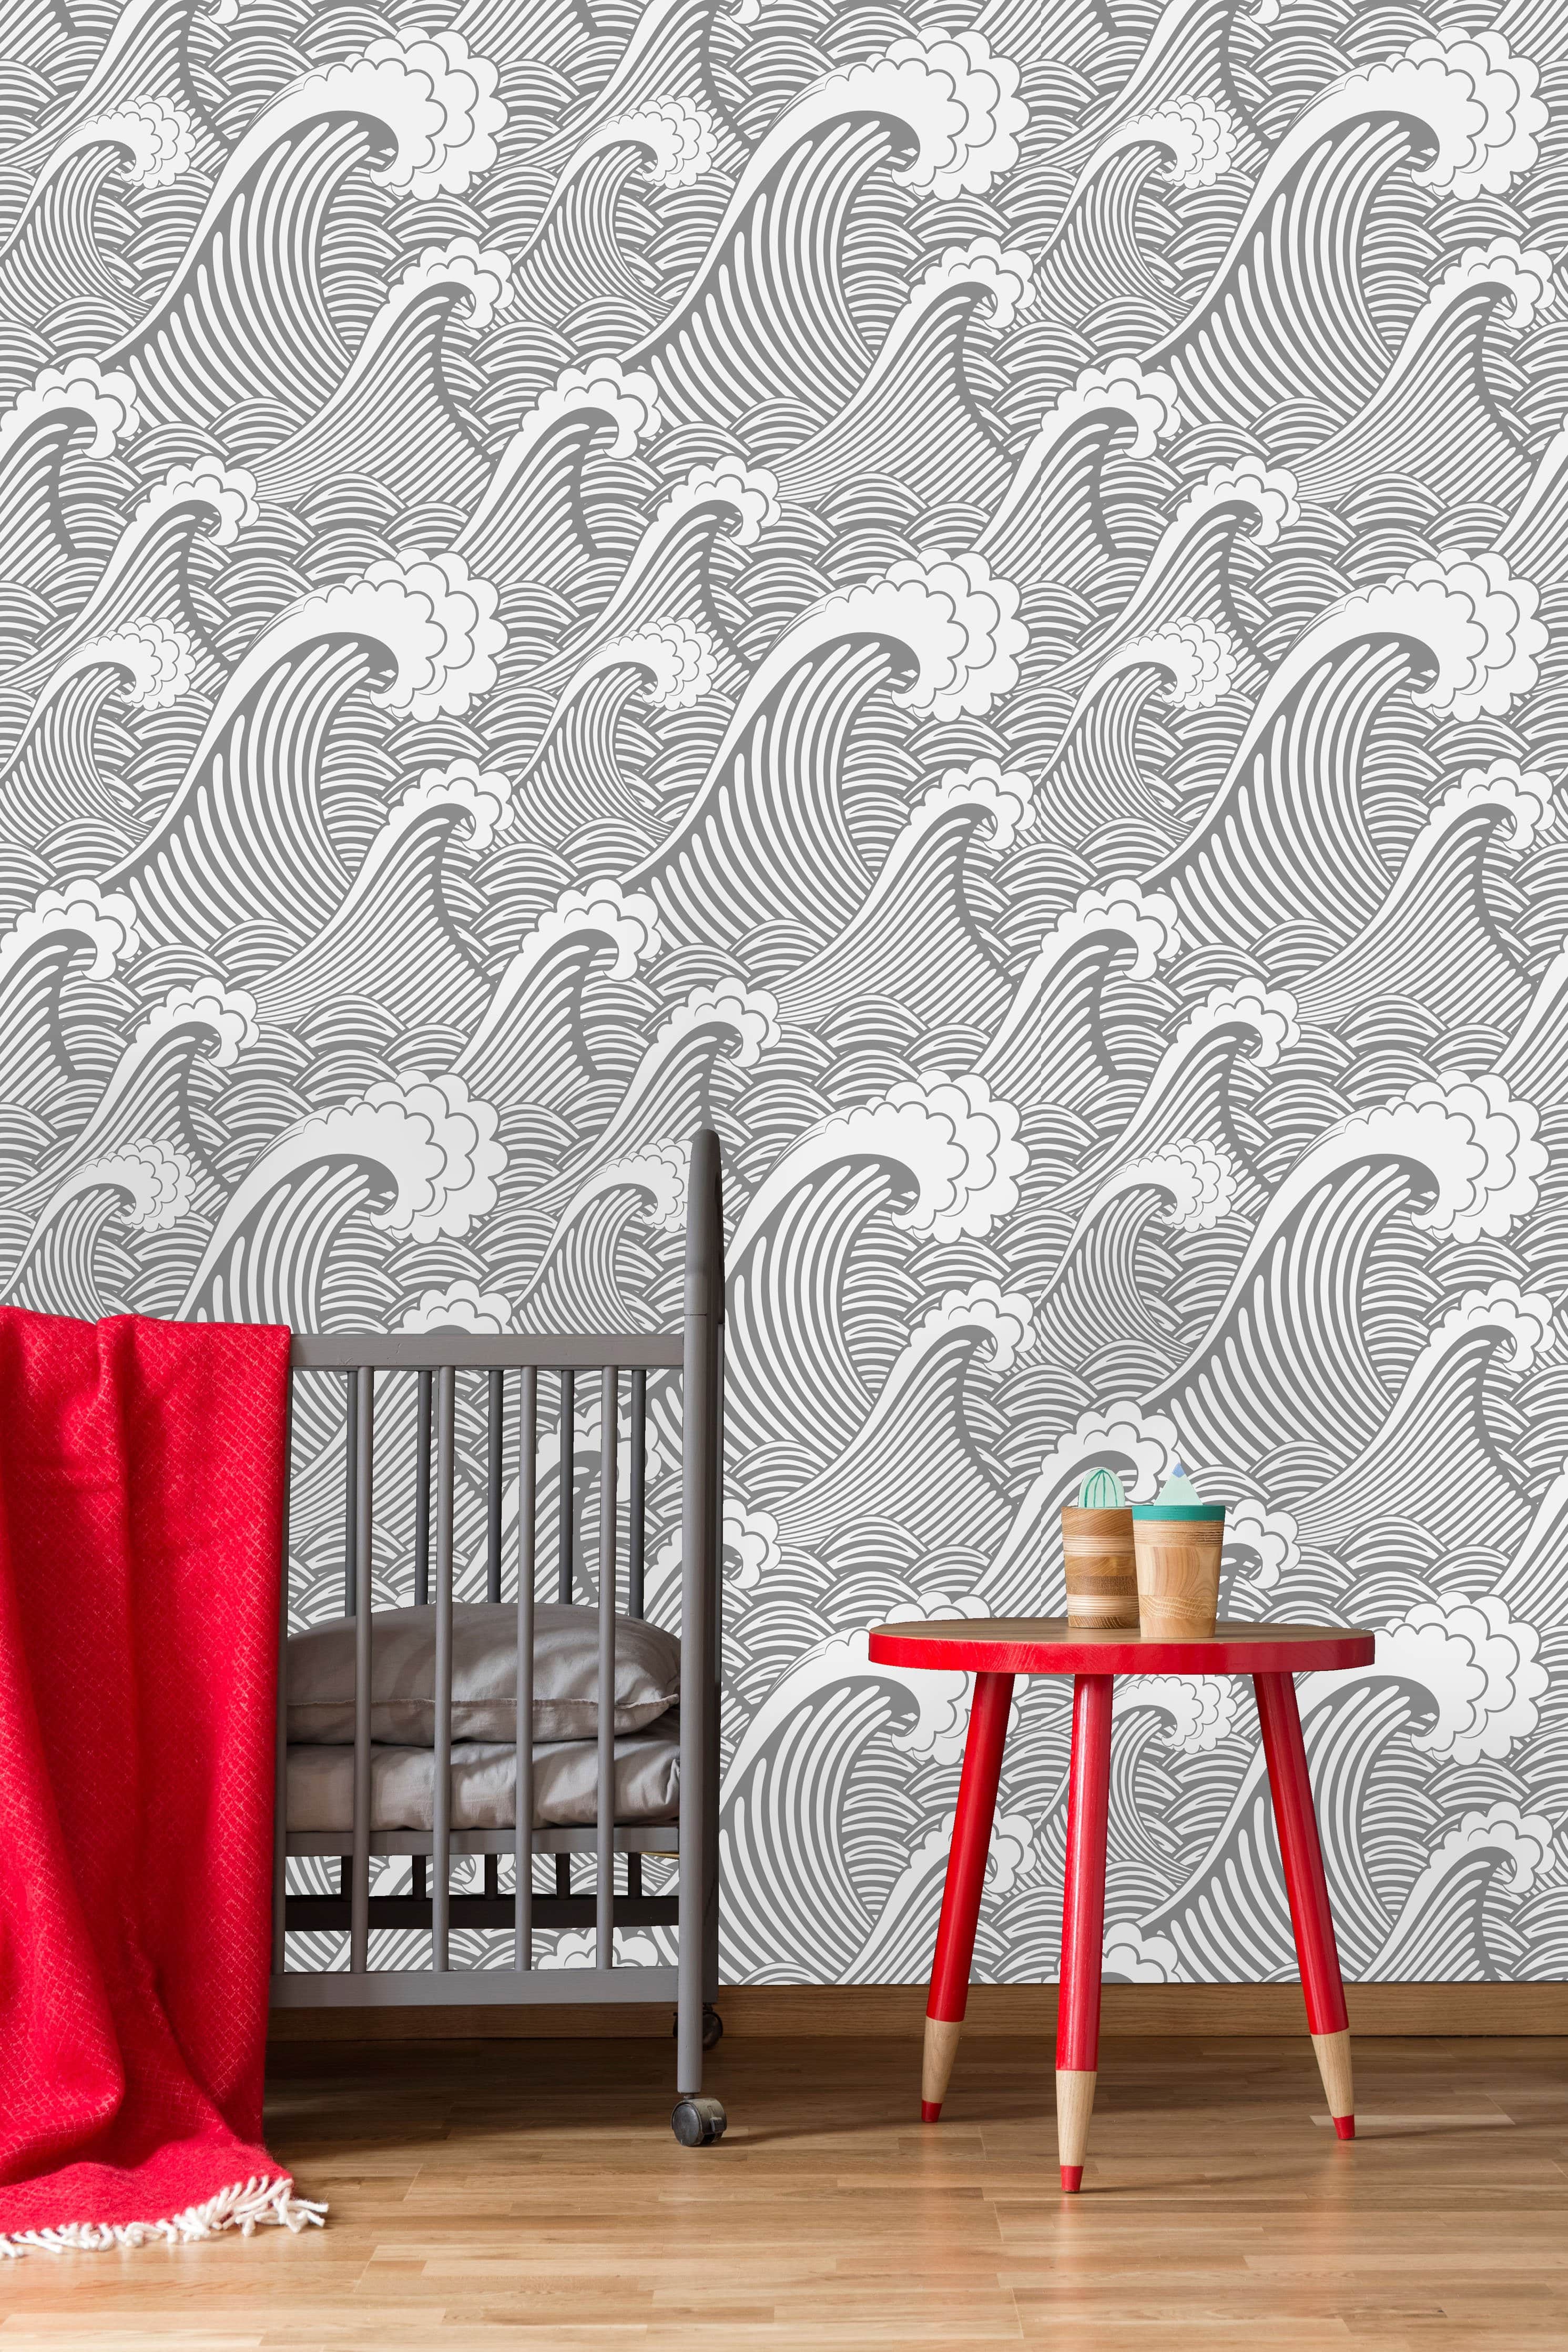 Dragon Waves Wallpaper  Removable Wallpaper Peel and Stick Wallpaper   ONDECORCOM